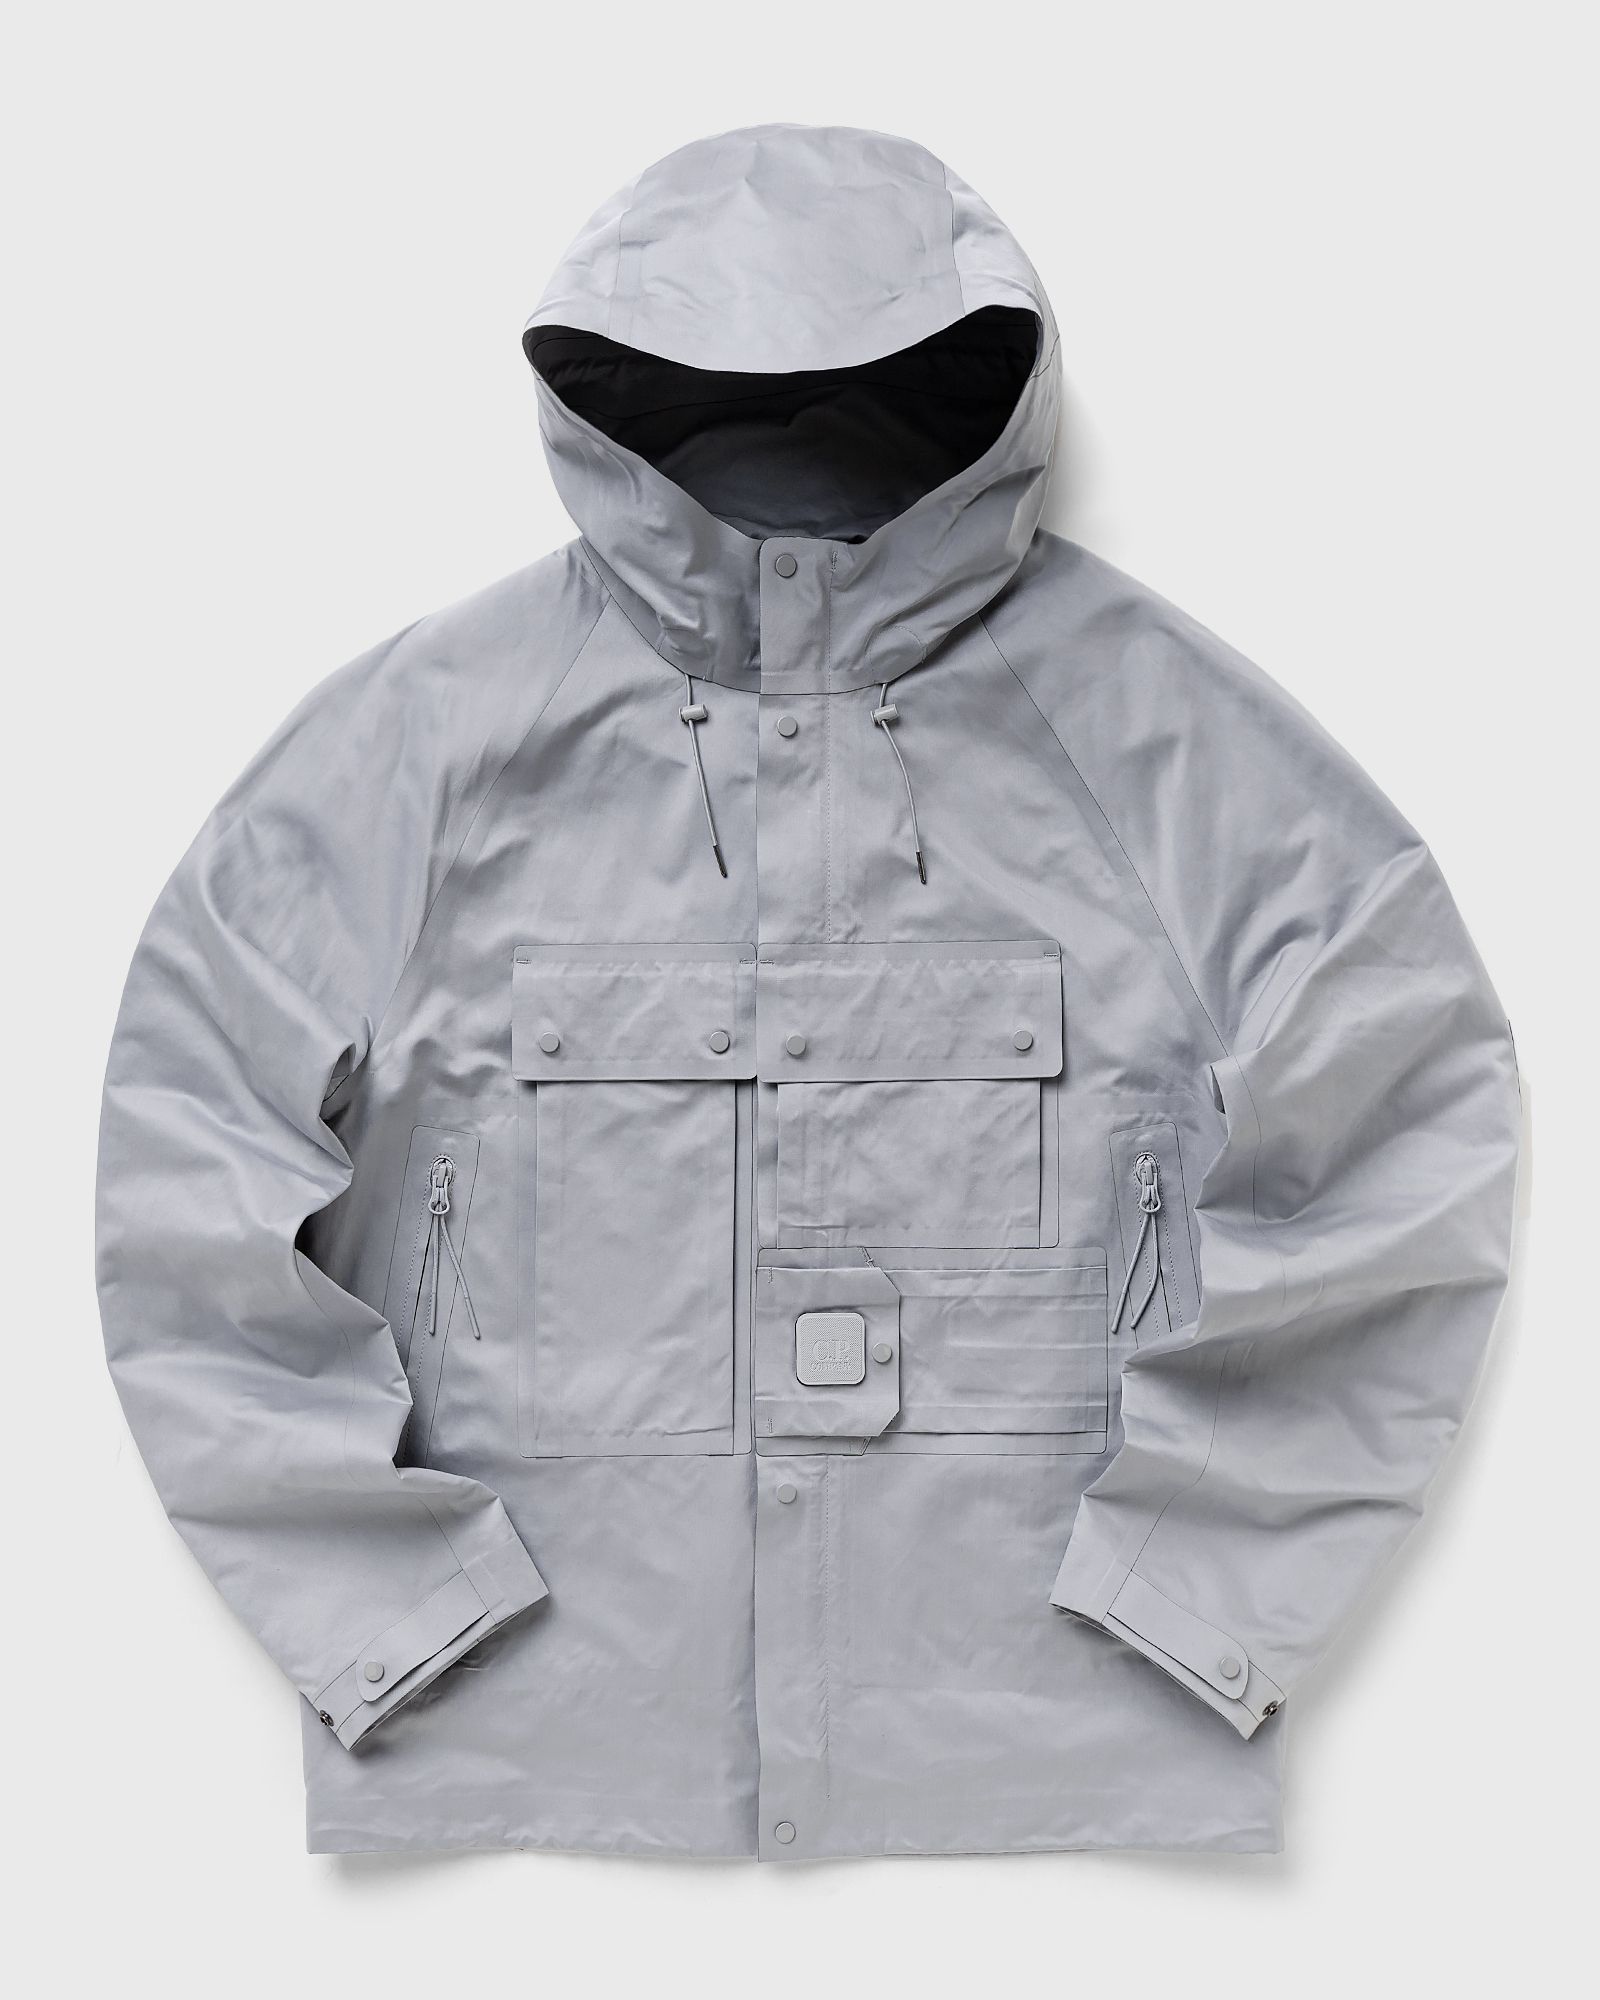 c.p. company metropolis series a.a.c. hooded jacket men windbreaker